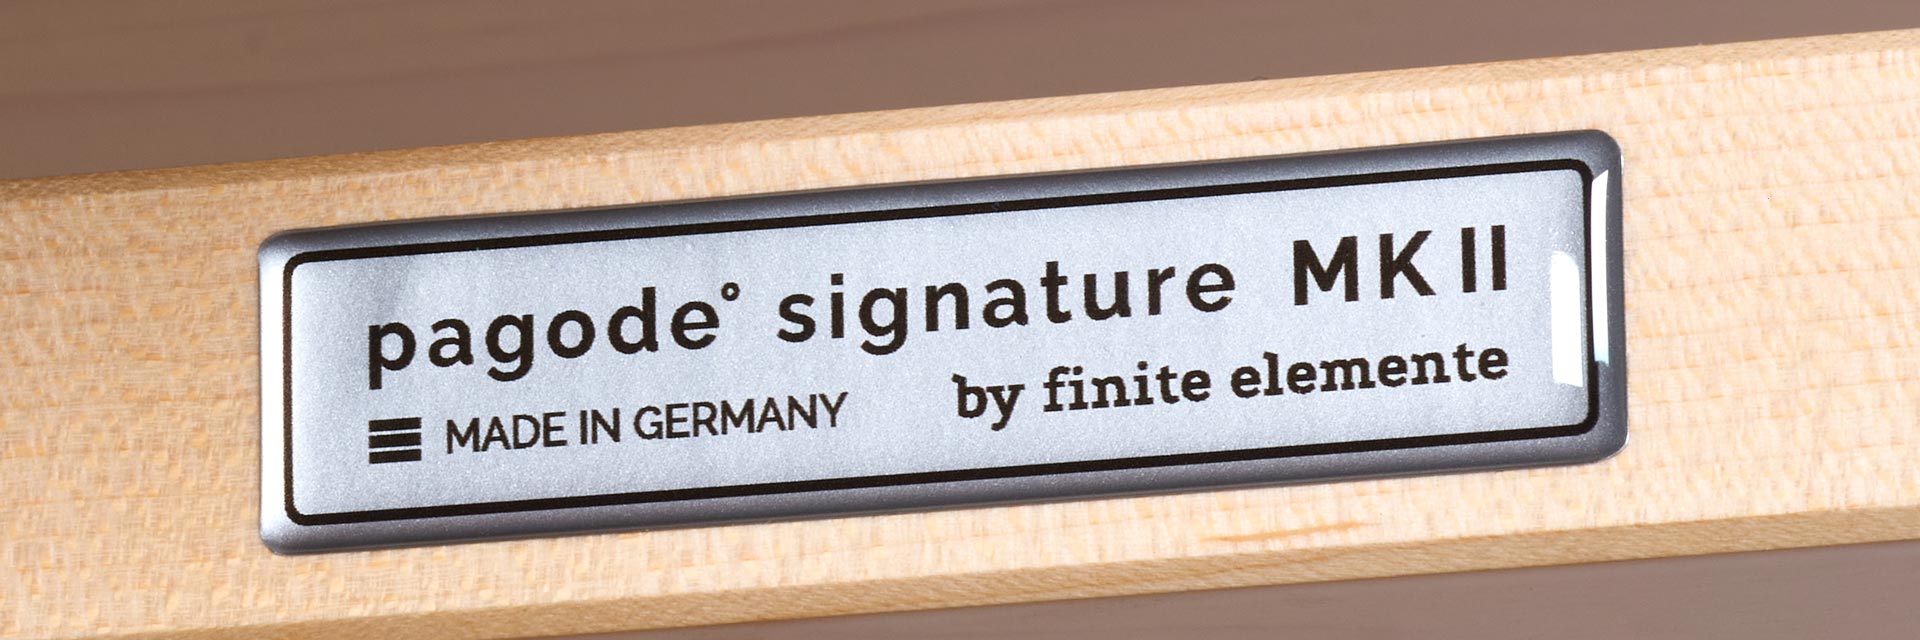 Finite Elemente Pagode Signature MkII